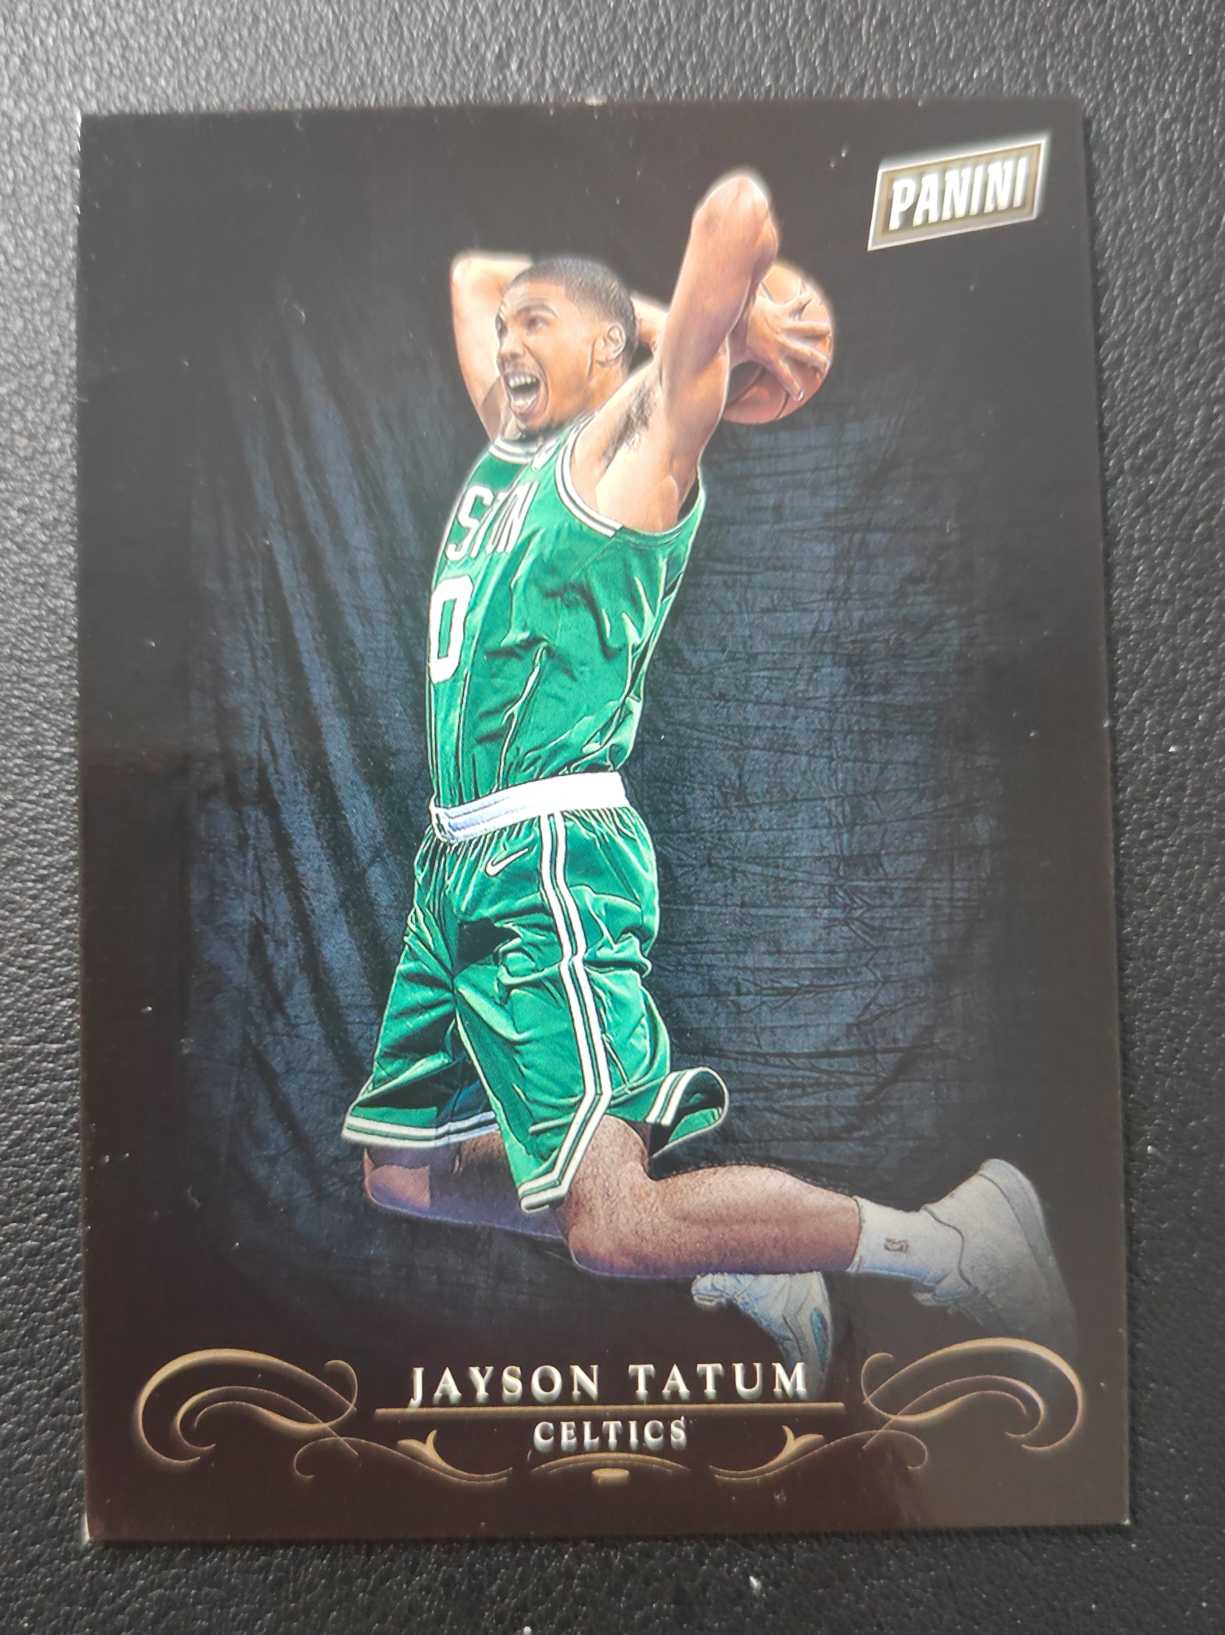 2017-18 Panini black friday Jayson Tatum RC 展会包 新秀RC   凯尔特人 塔图姆 base  稀有   值得收藏